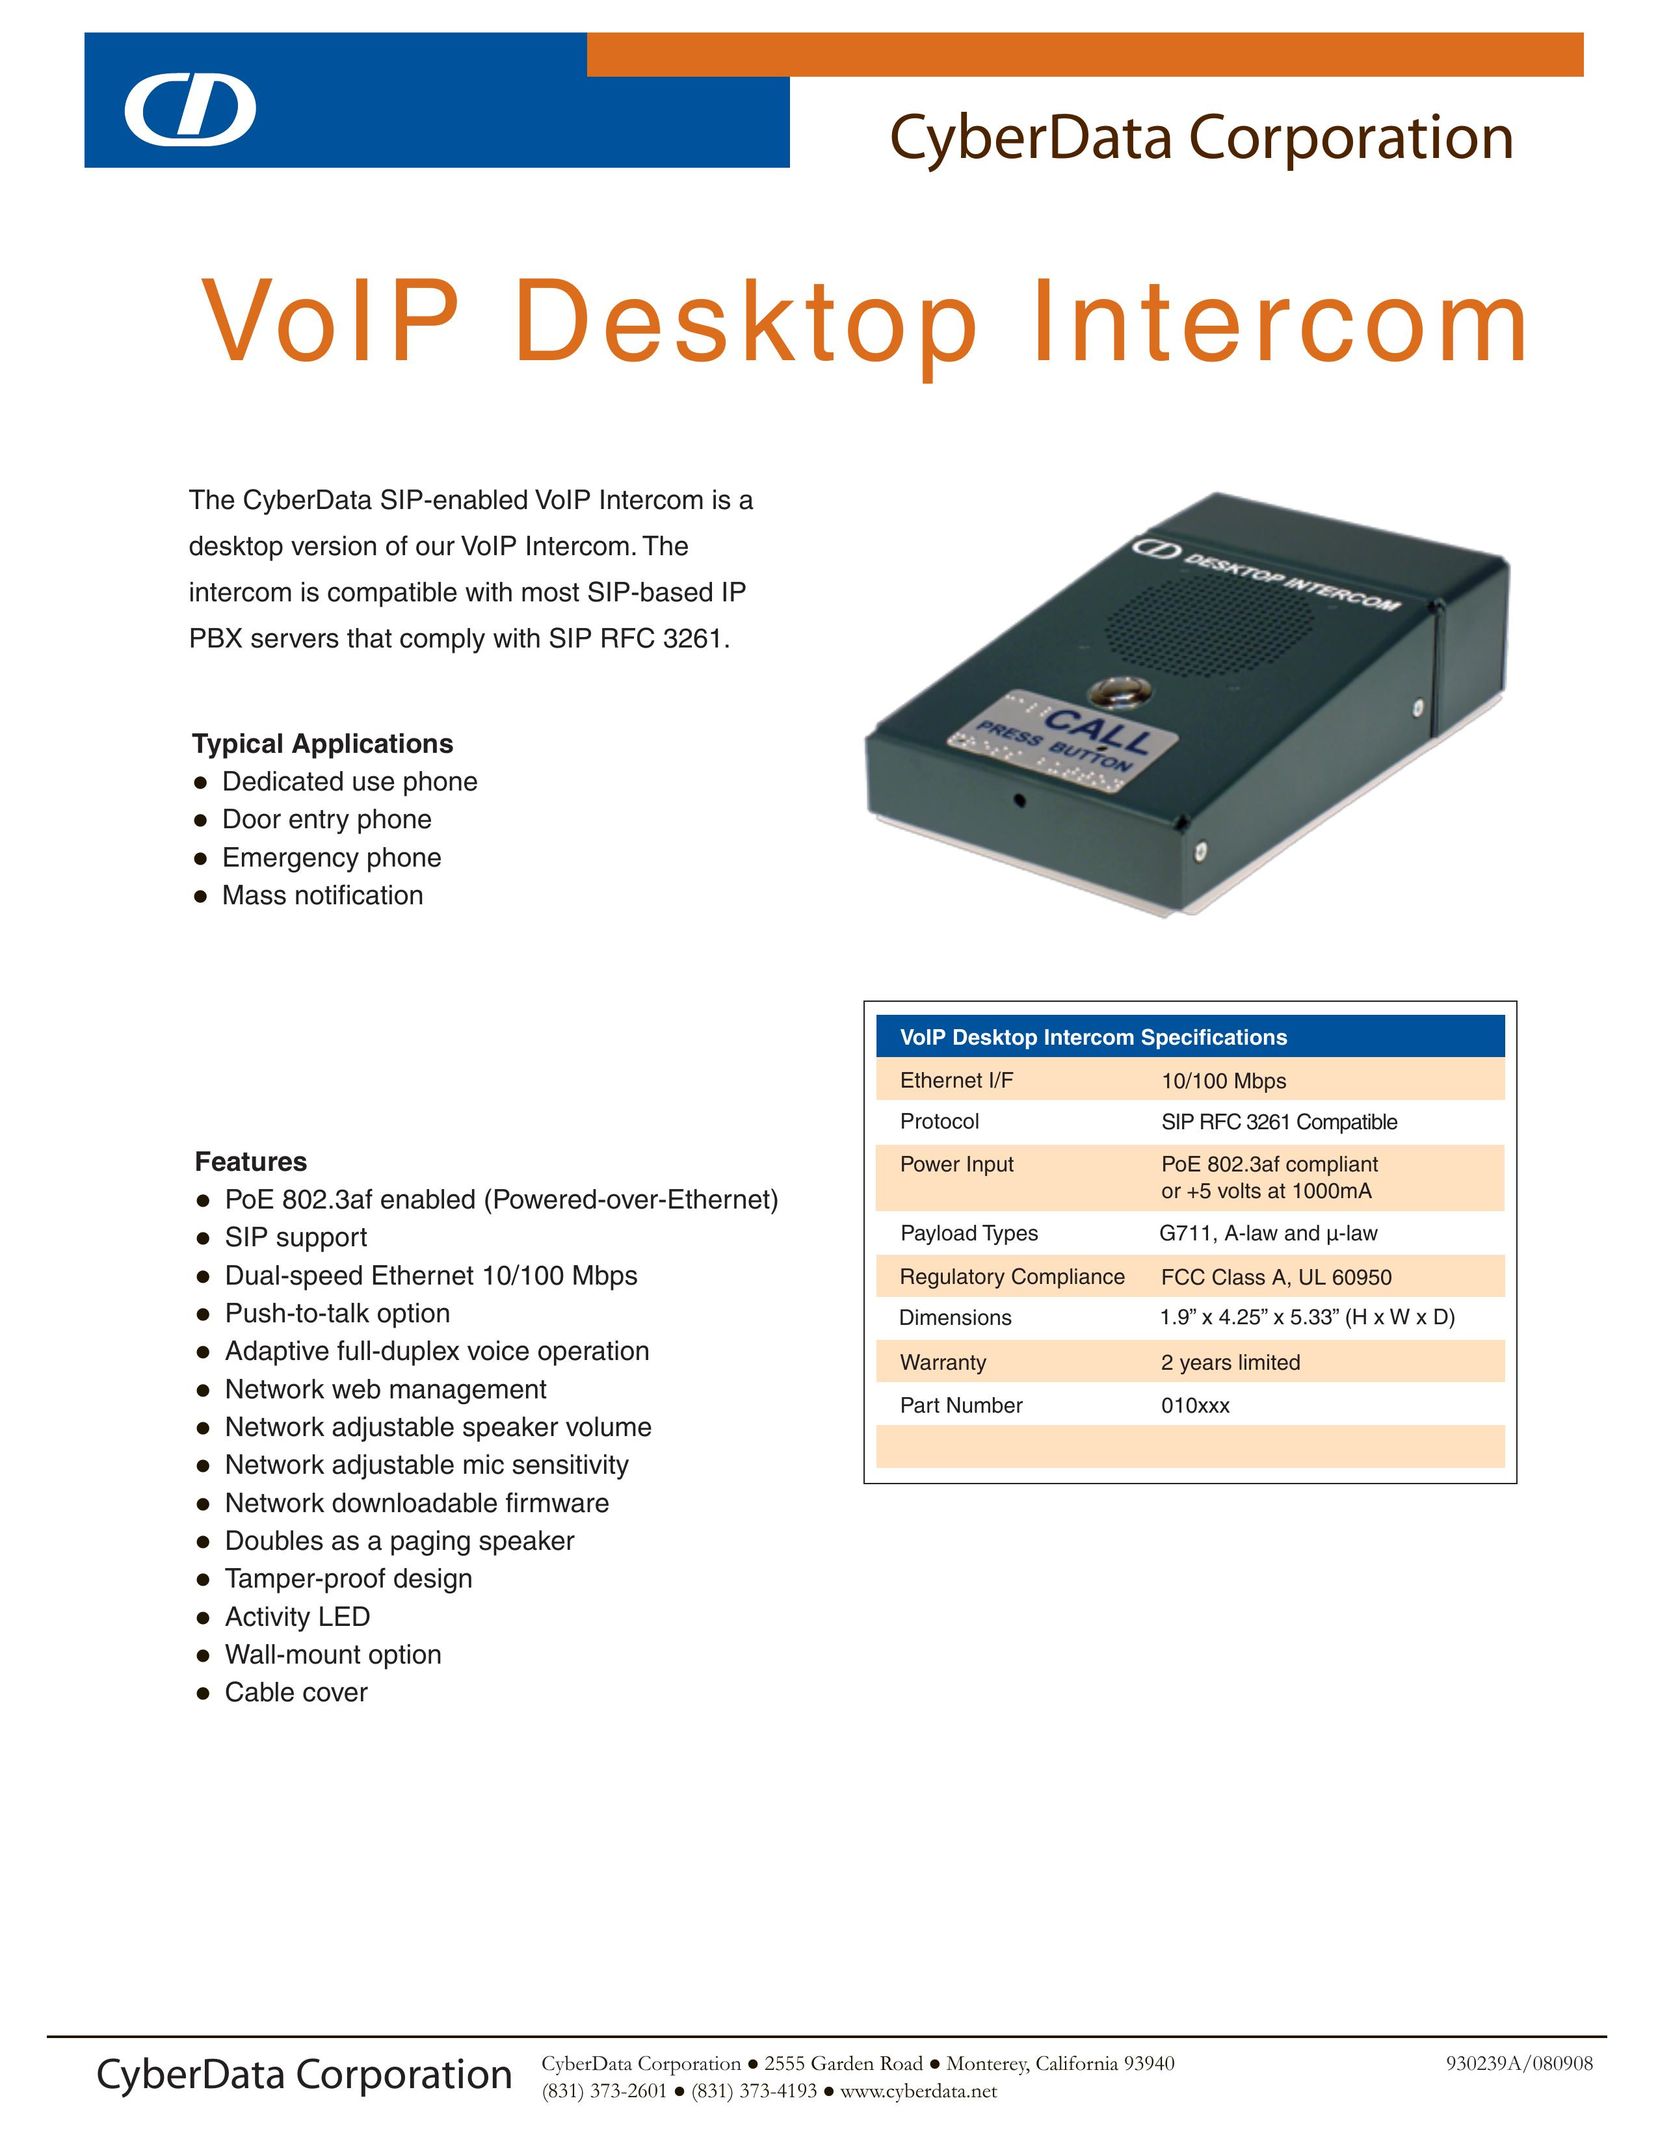 CyberData VoIP Desktop Intercom Network Card User Manual